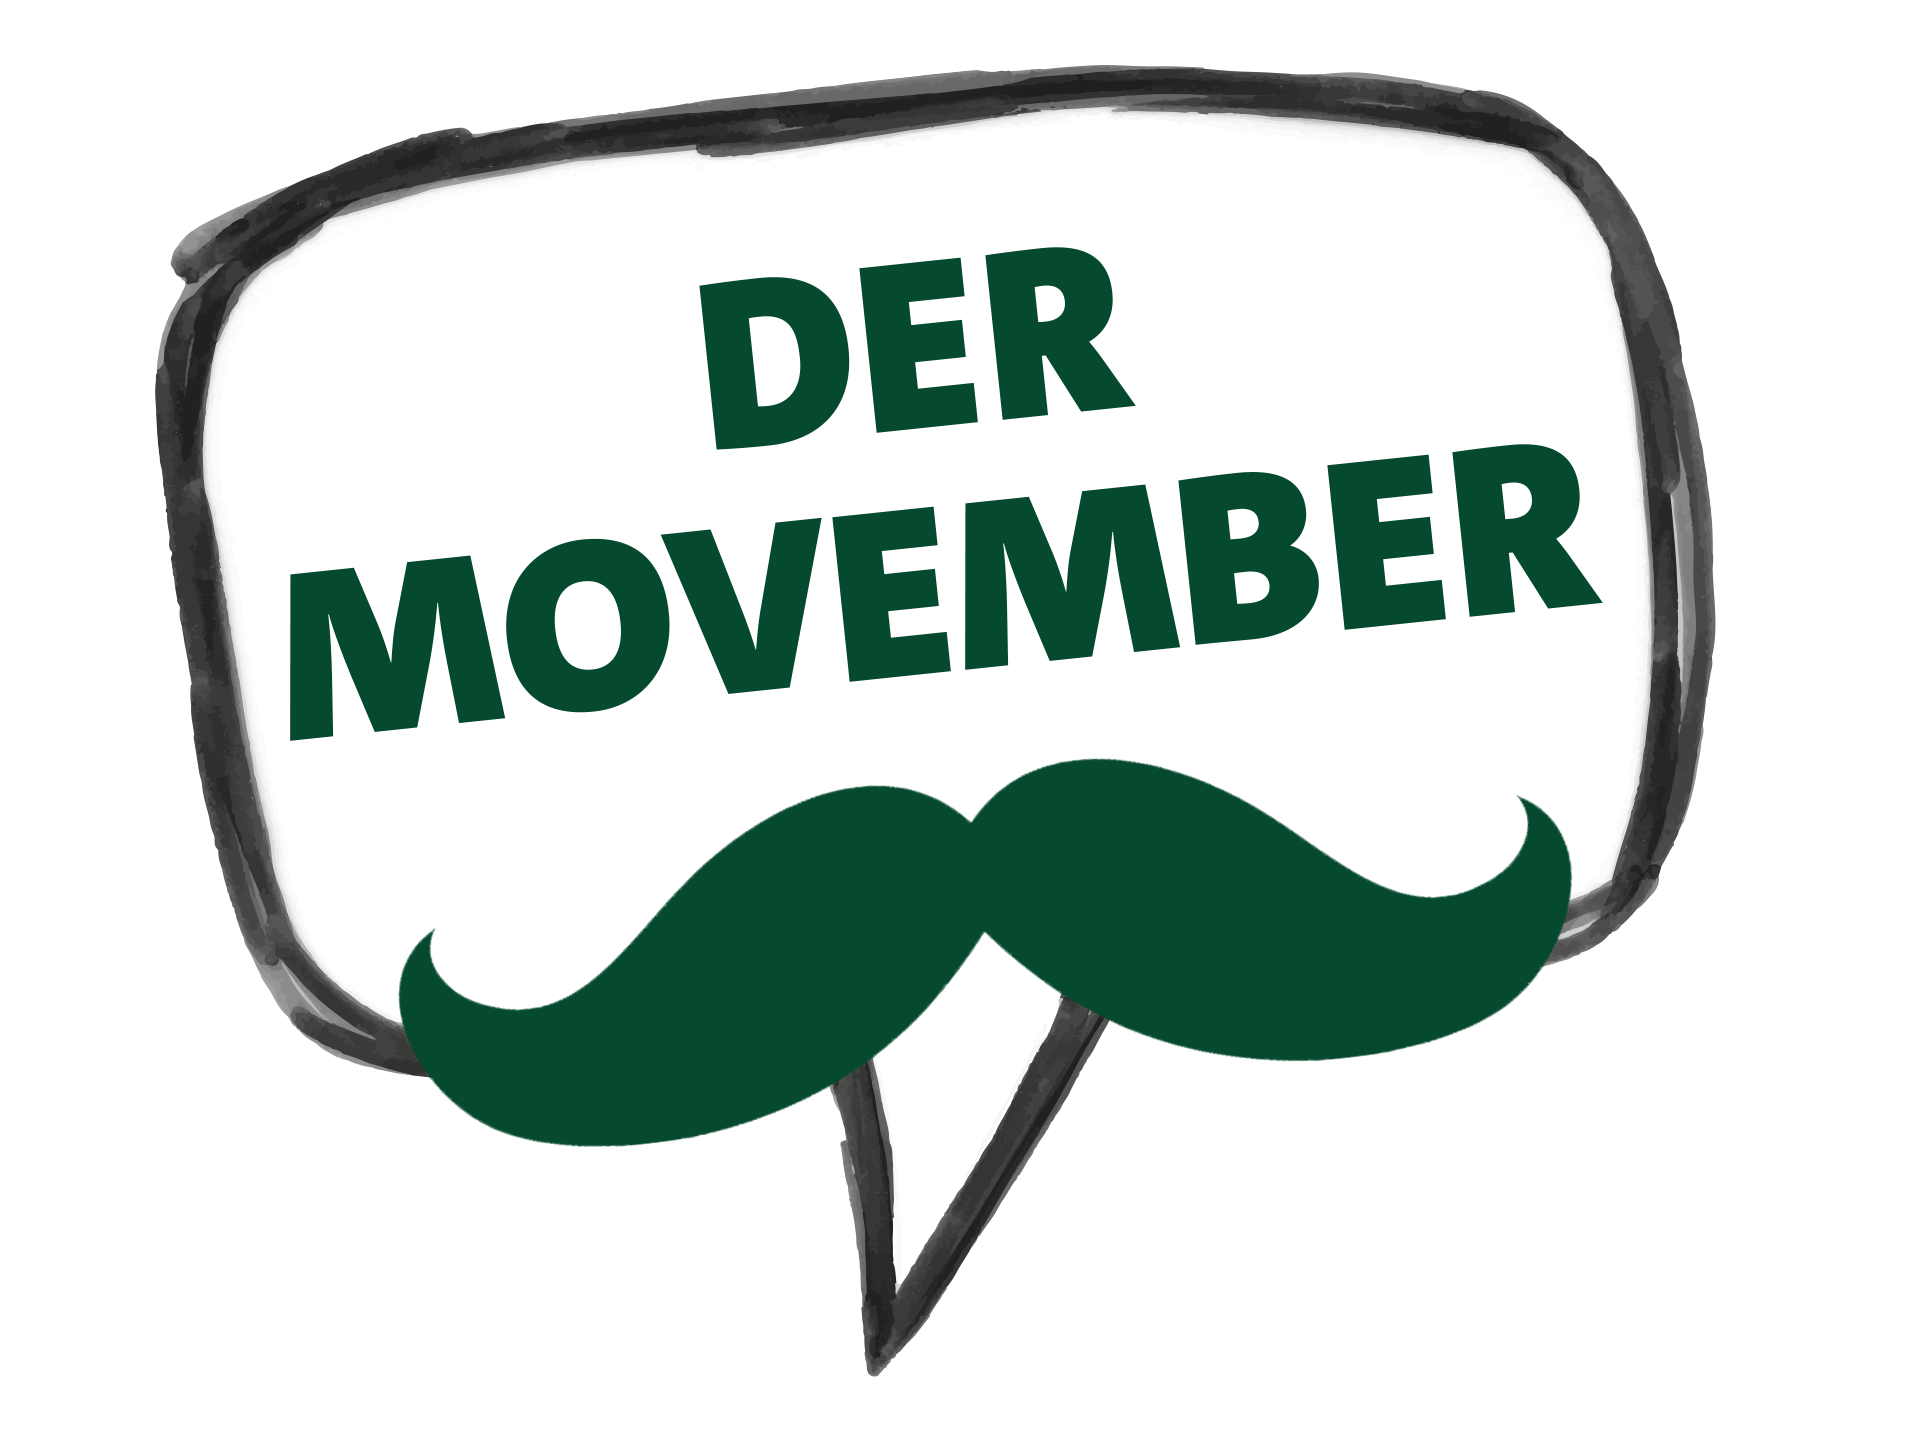 Der Movember - Erklärung zum Männermonat November